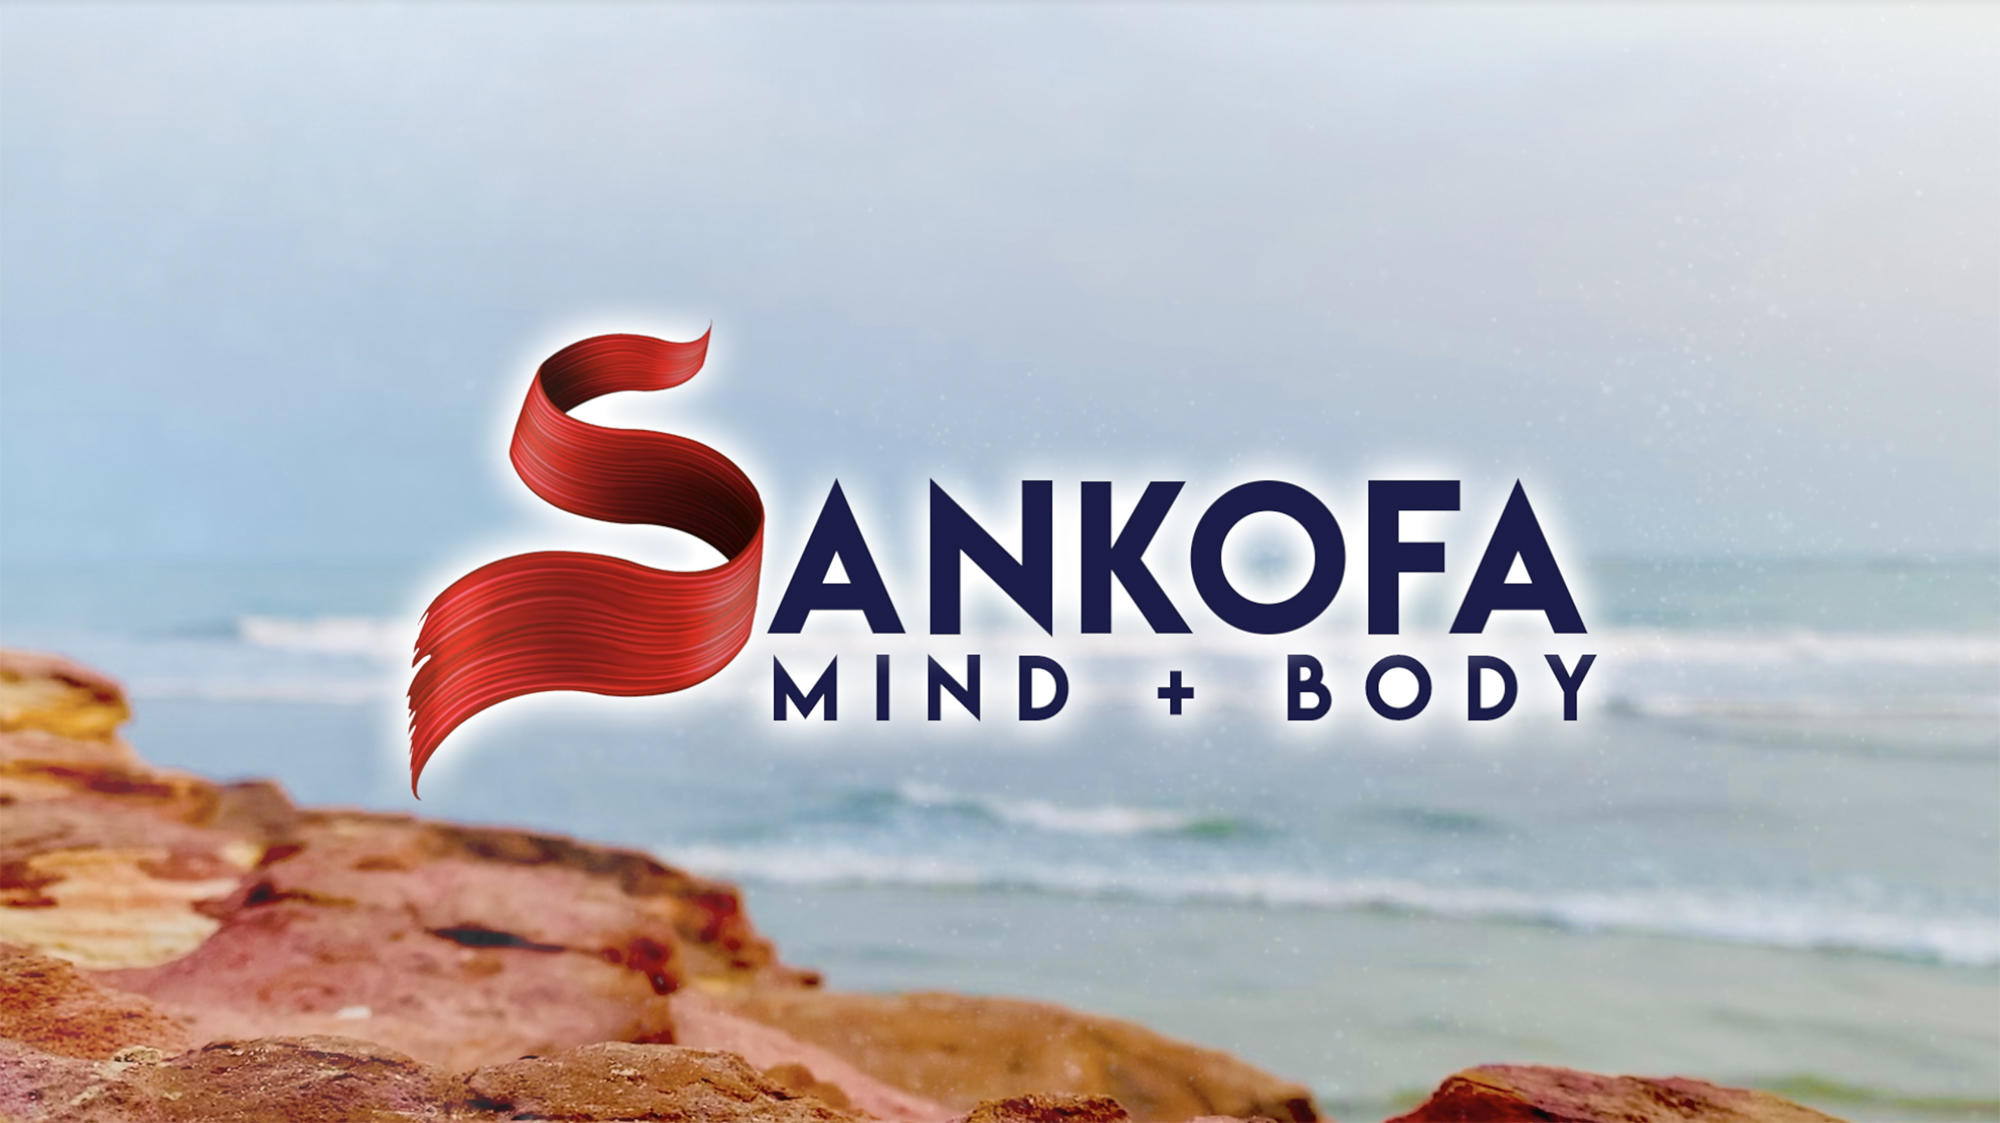 Sankofa Mind and Body